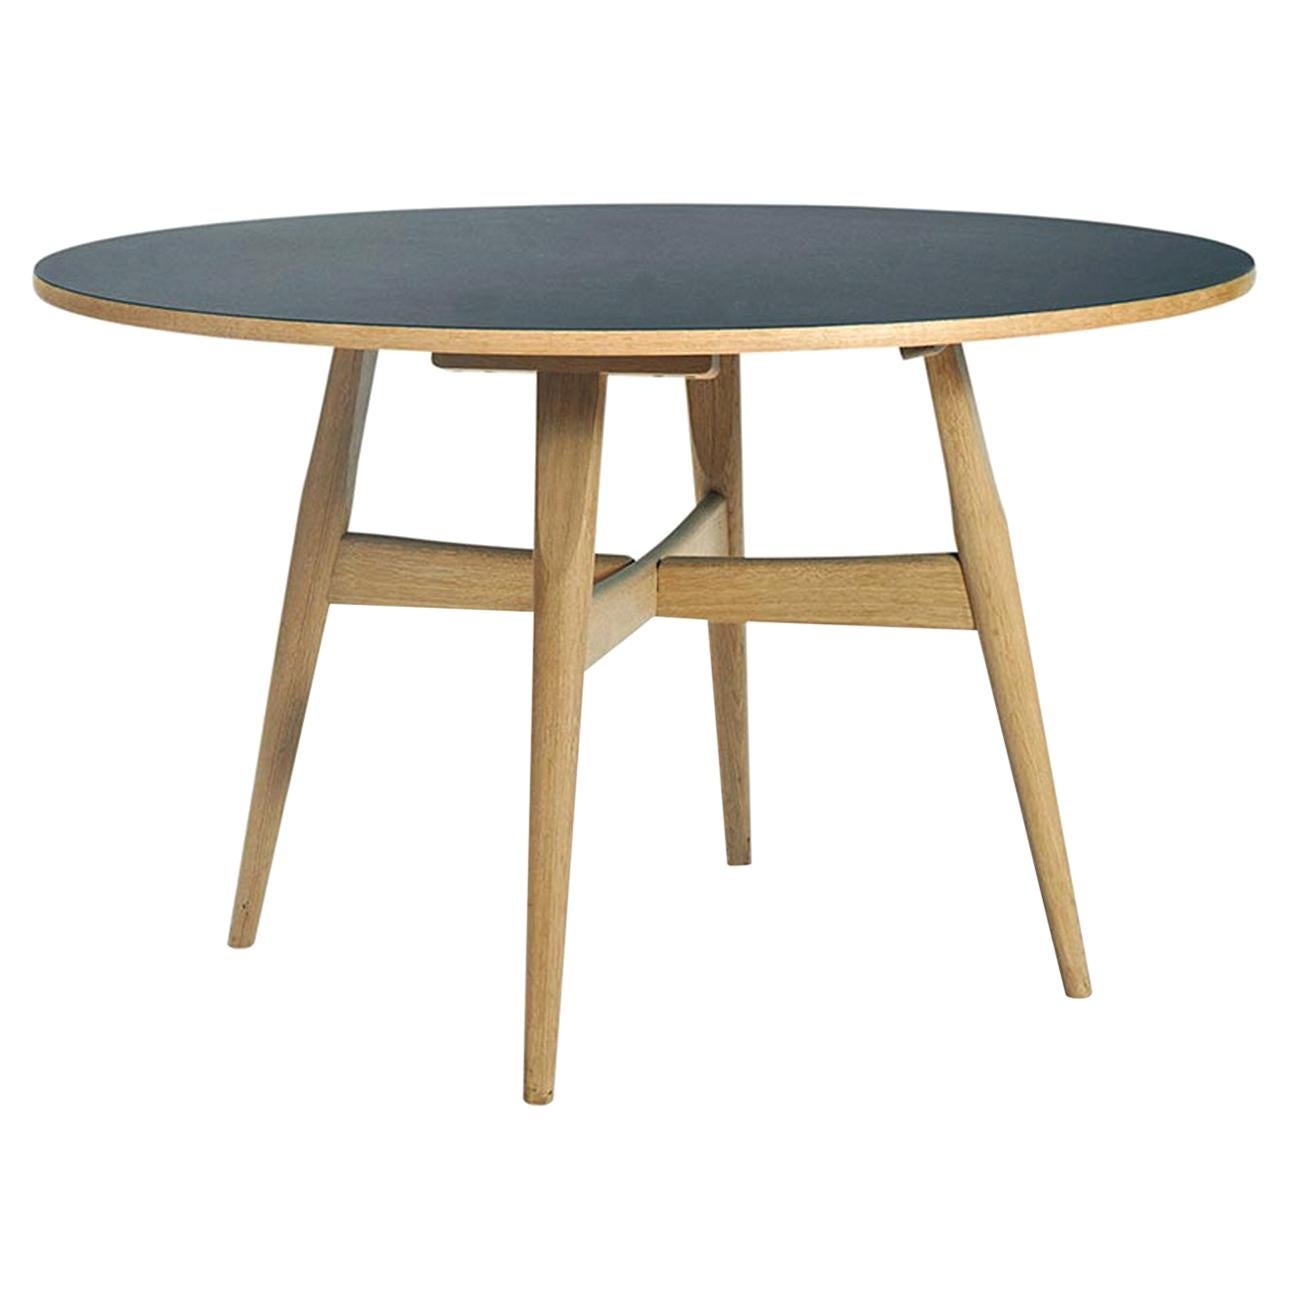 Hans Wegner GE-526 Dining Table, Laminate Table Top in Oak with Legs in Oak